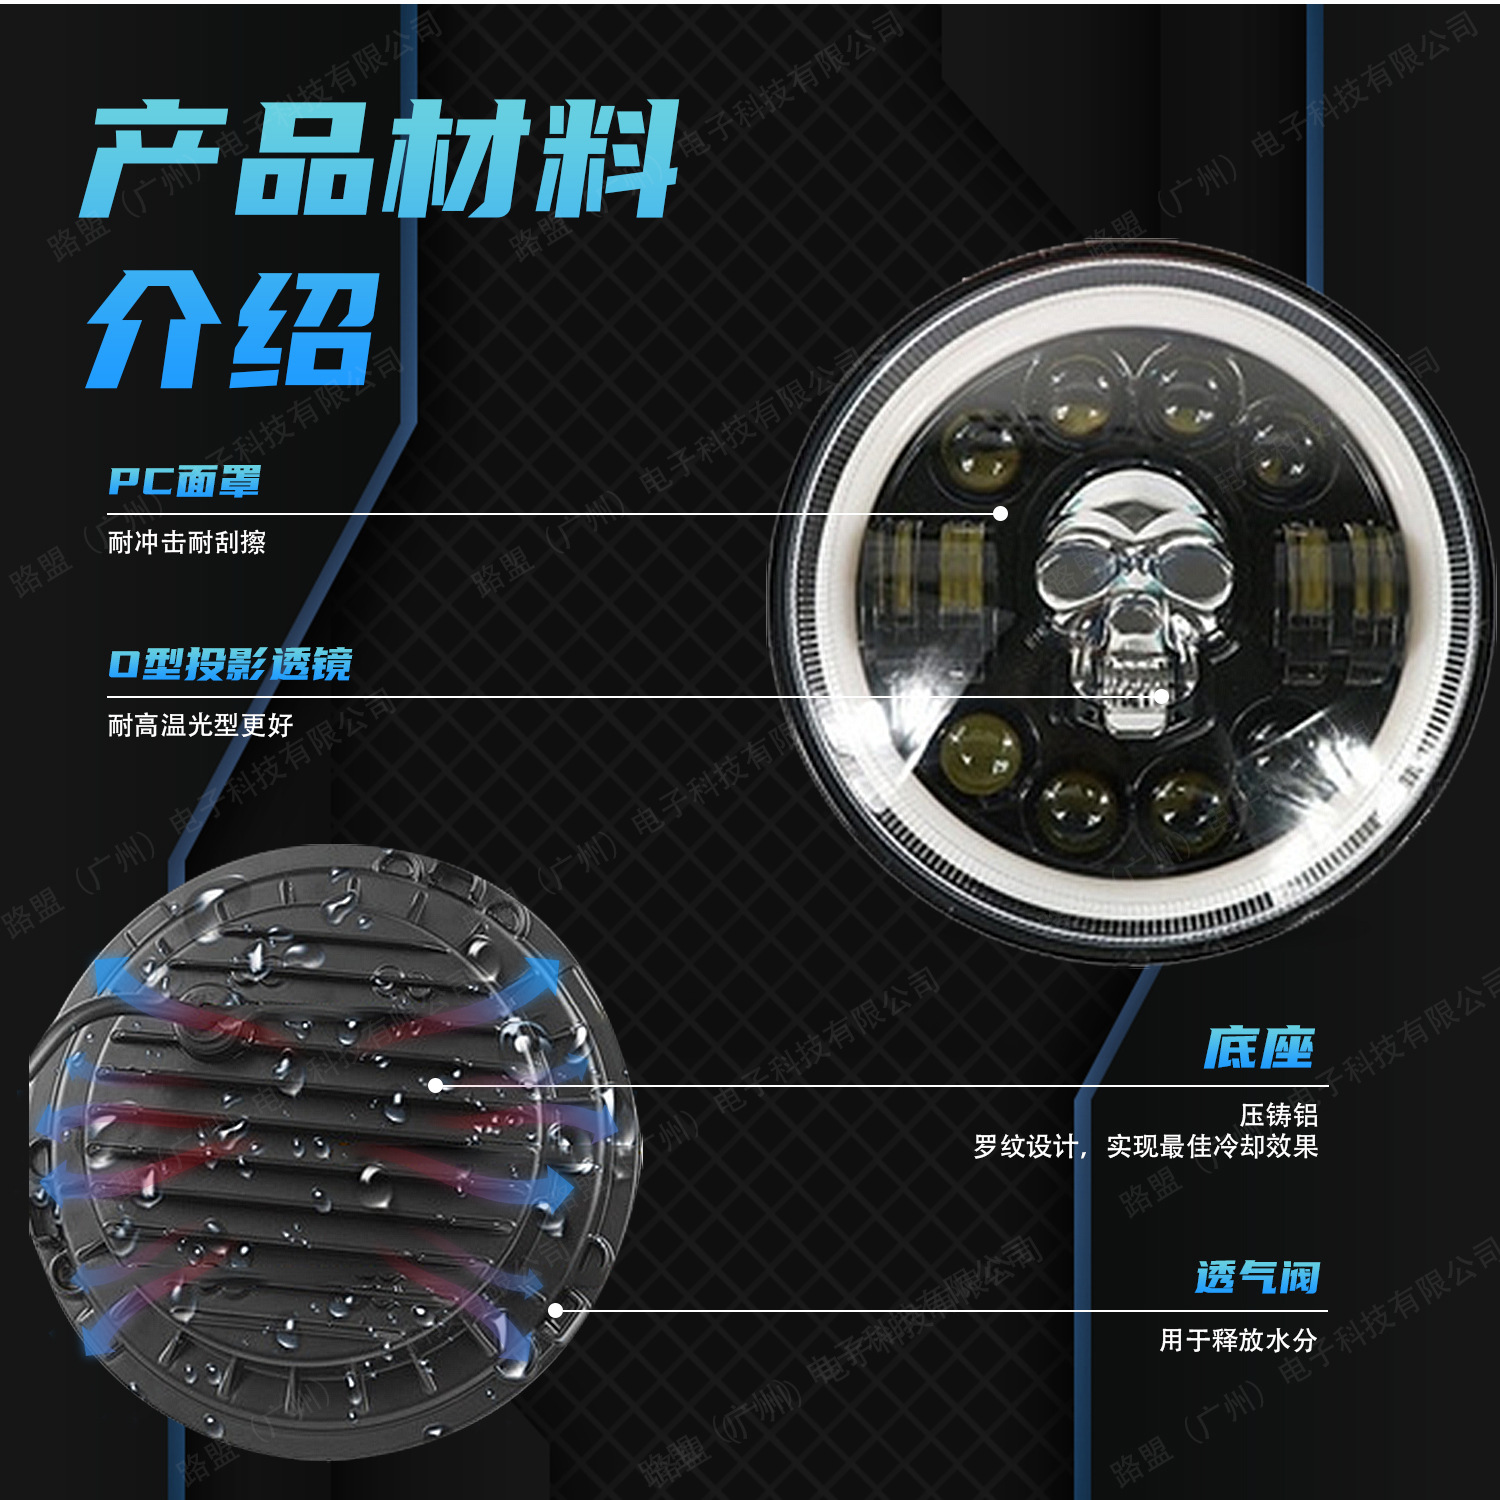 Cross-Border Hot 7-Inch Skull Wrangler LED Headlight Harley Motorcycle Car Lamp Modification Headlight